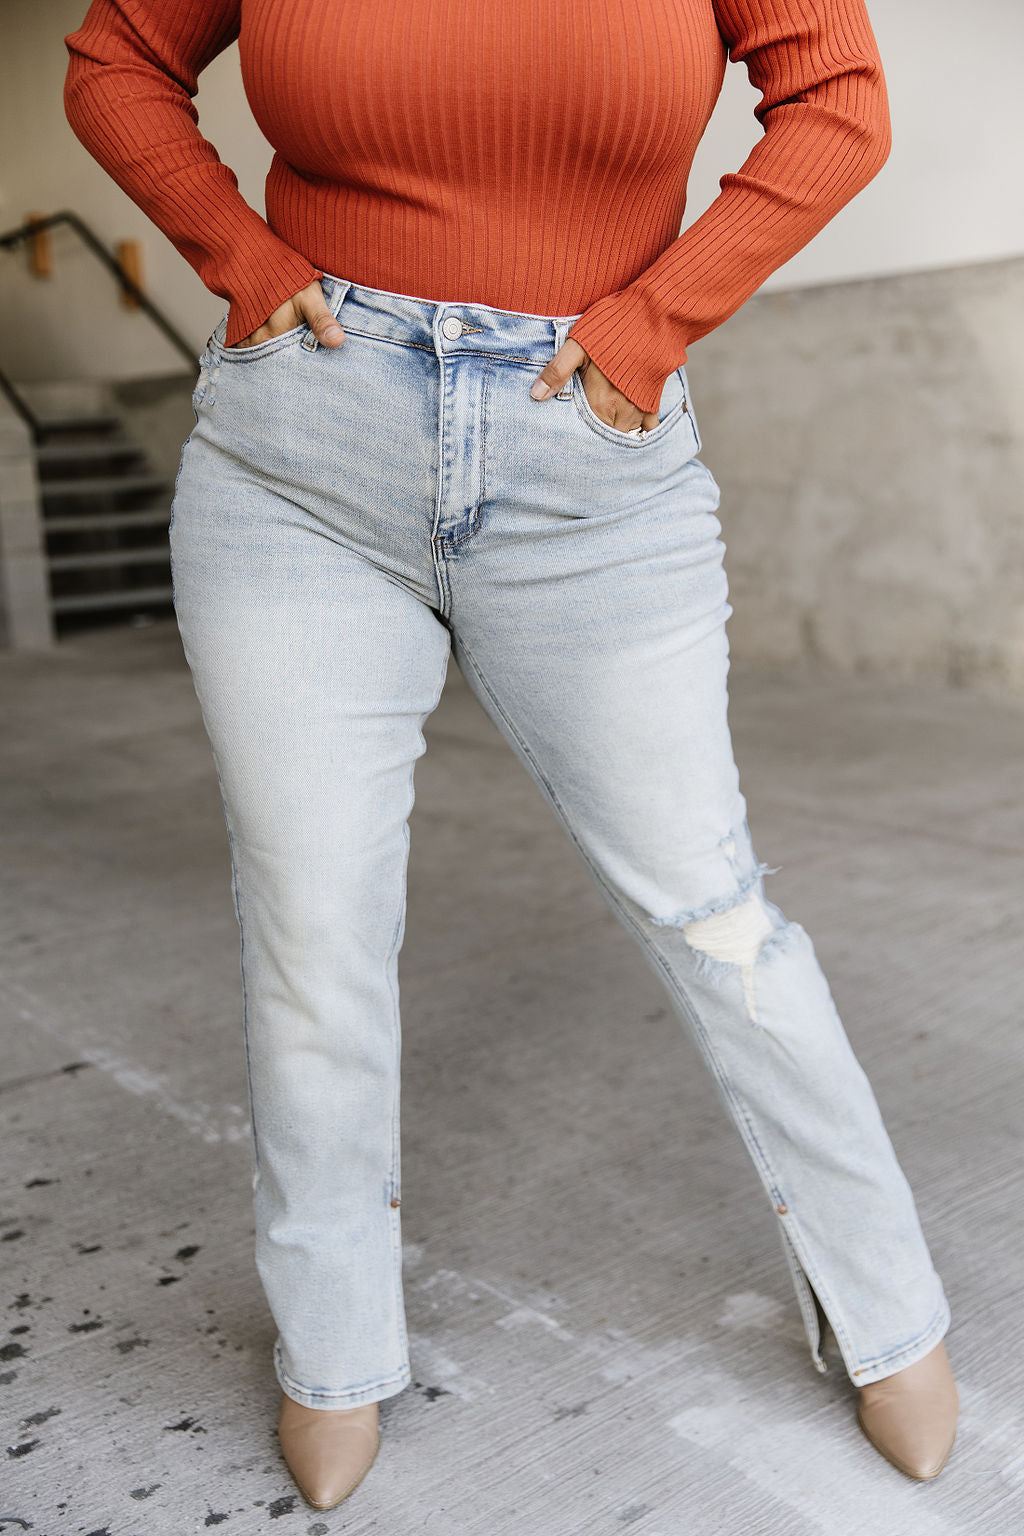 Lowell Straight Leg Jeans - Mindy Mae's Marketcomfy cute hoodies